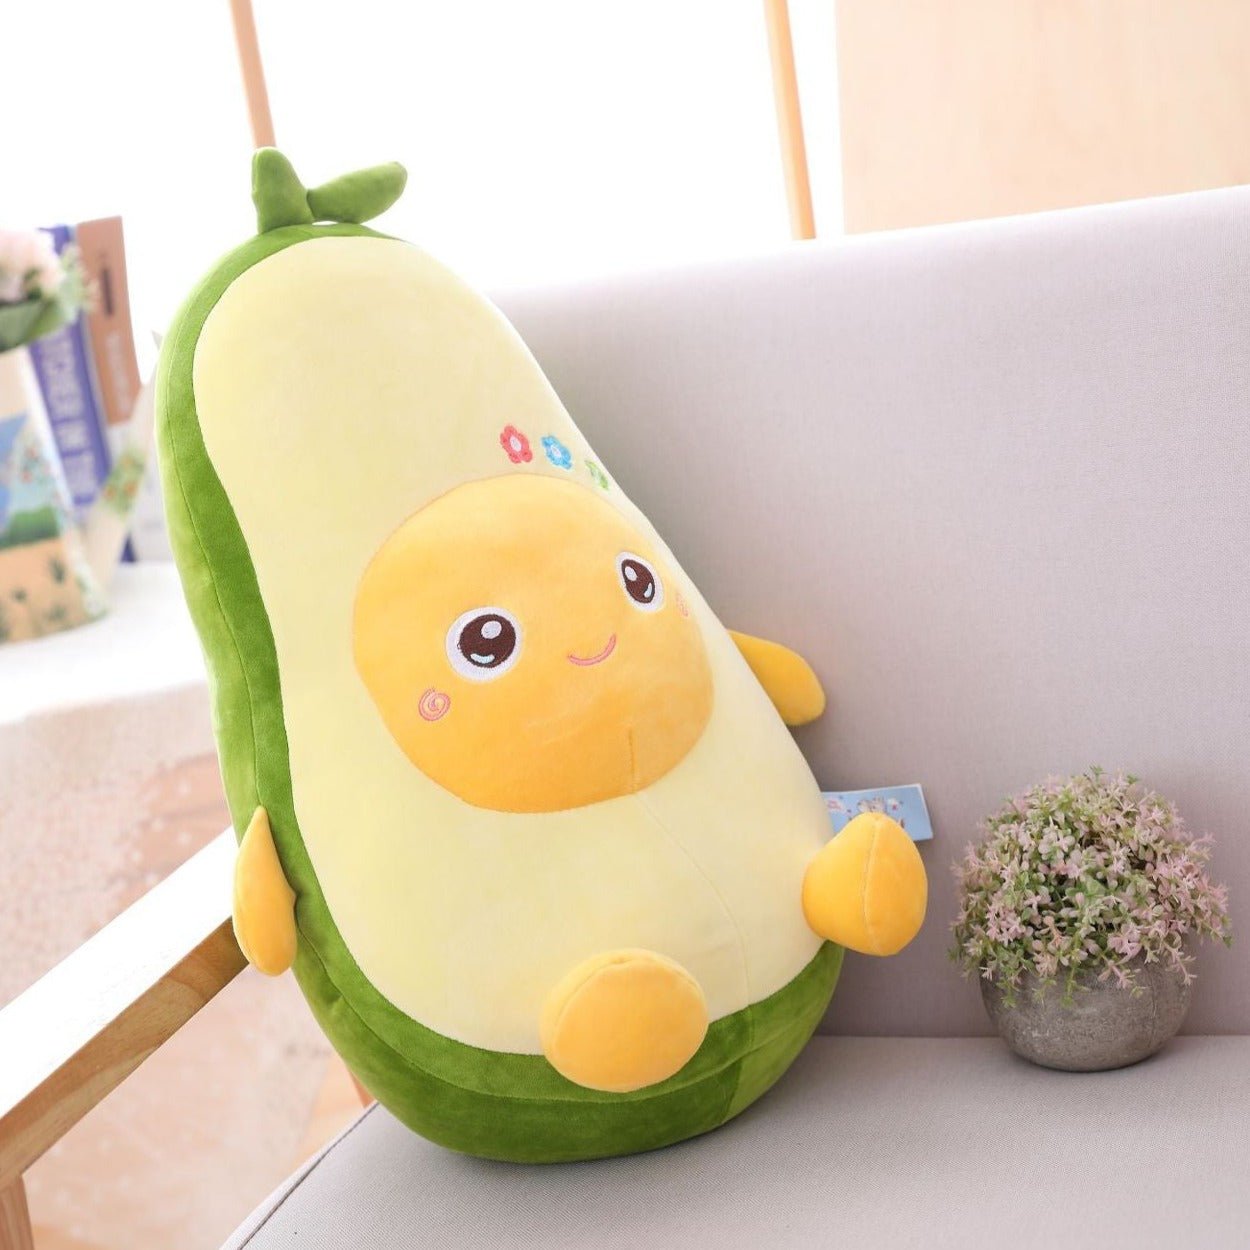 Cute Green Avocado Plush Toys Body Pillows - TOY-PLU-43901 - yangzhouyile - 42shops